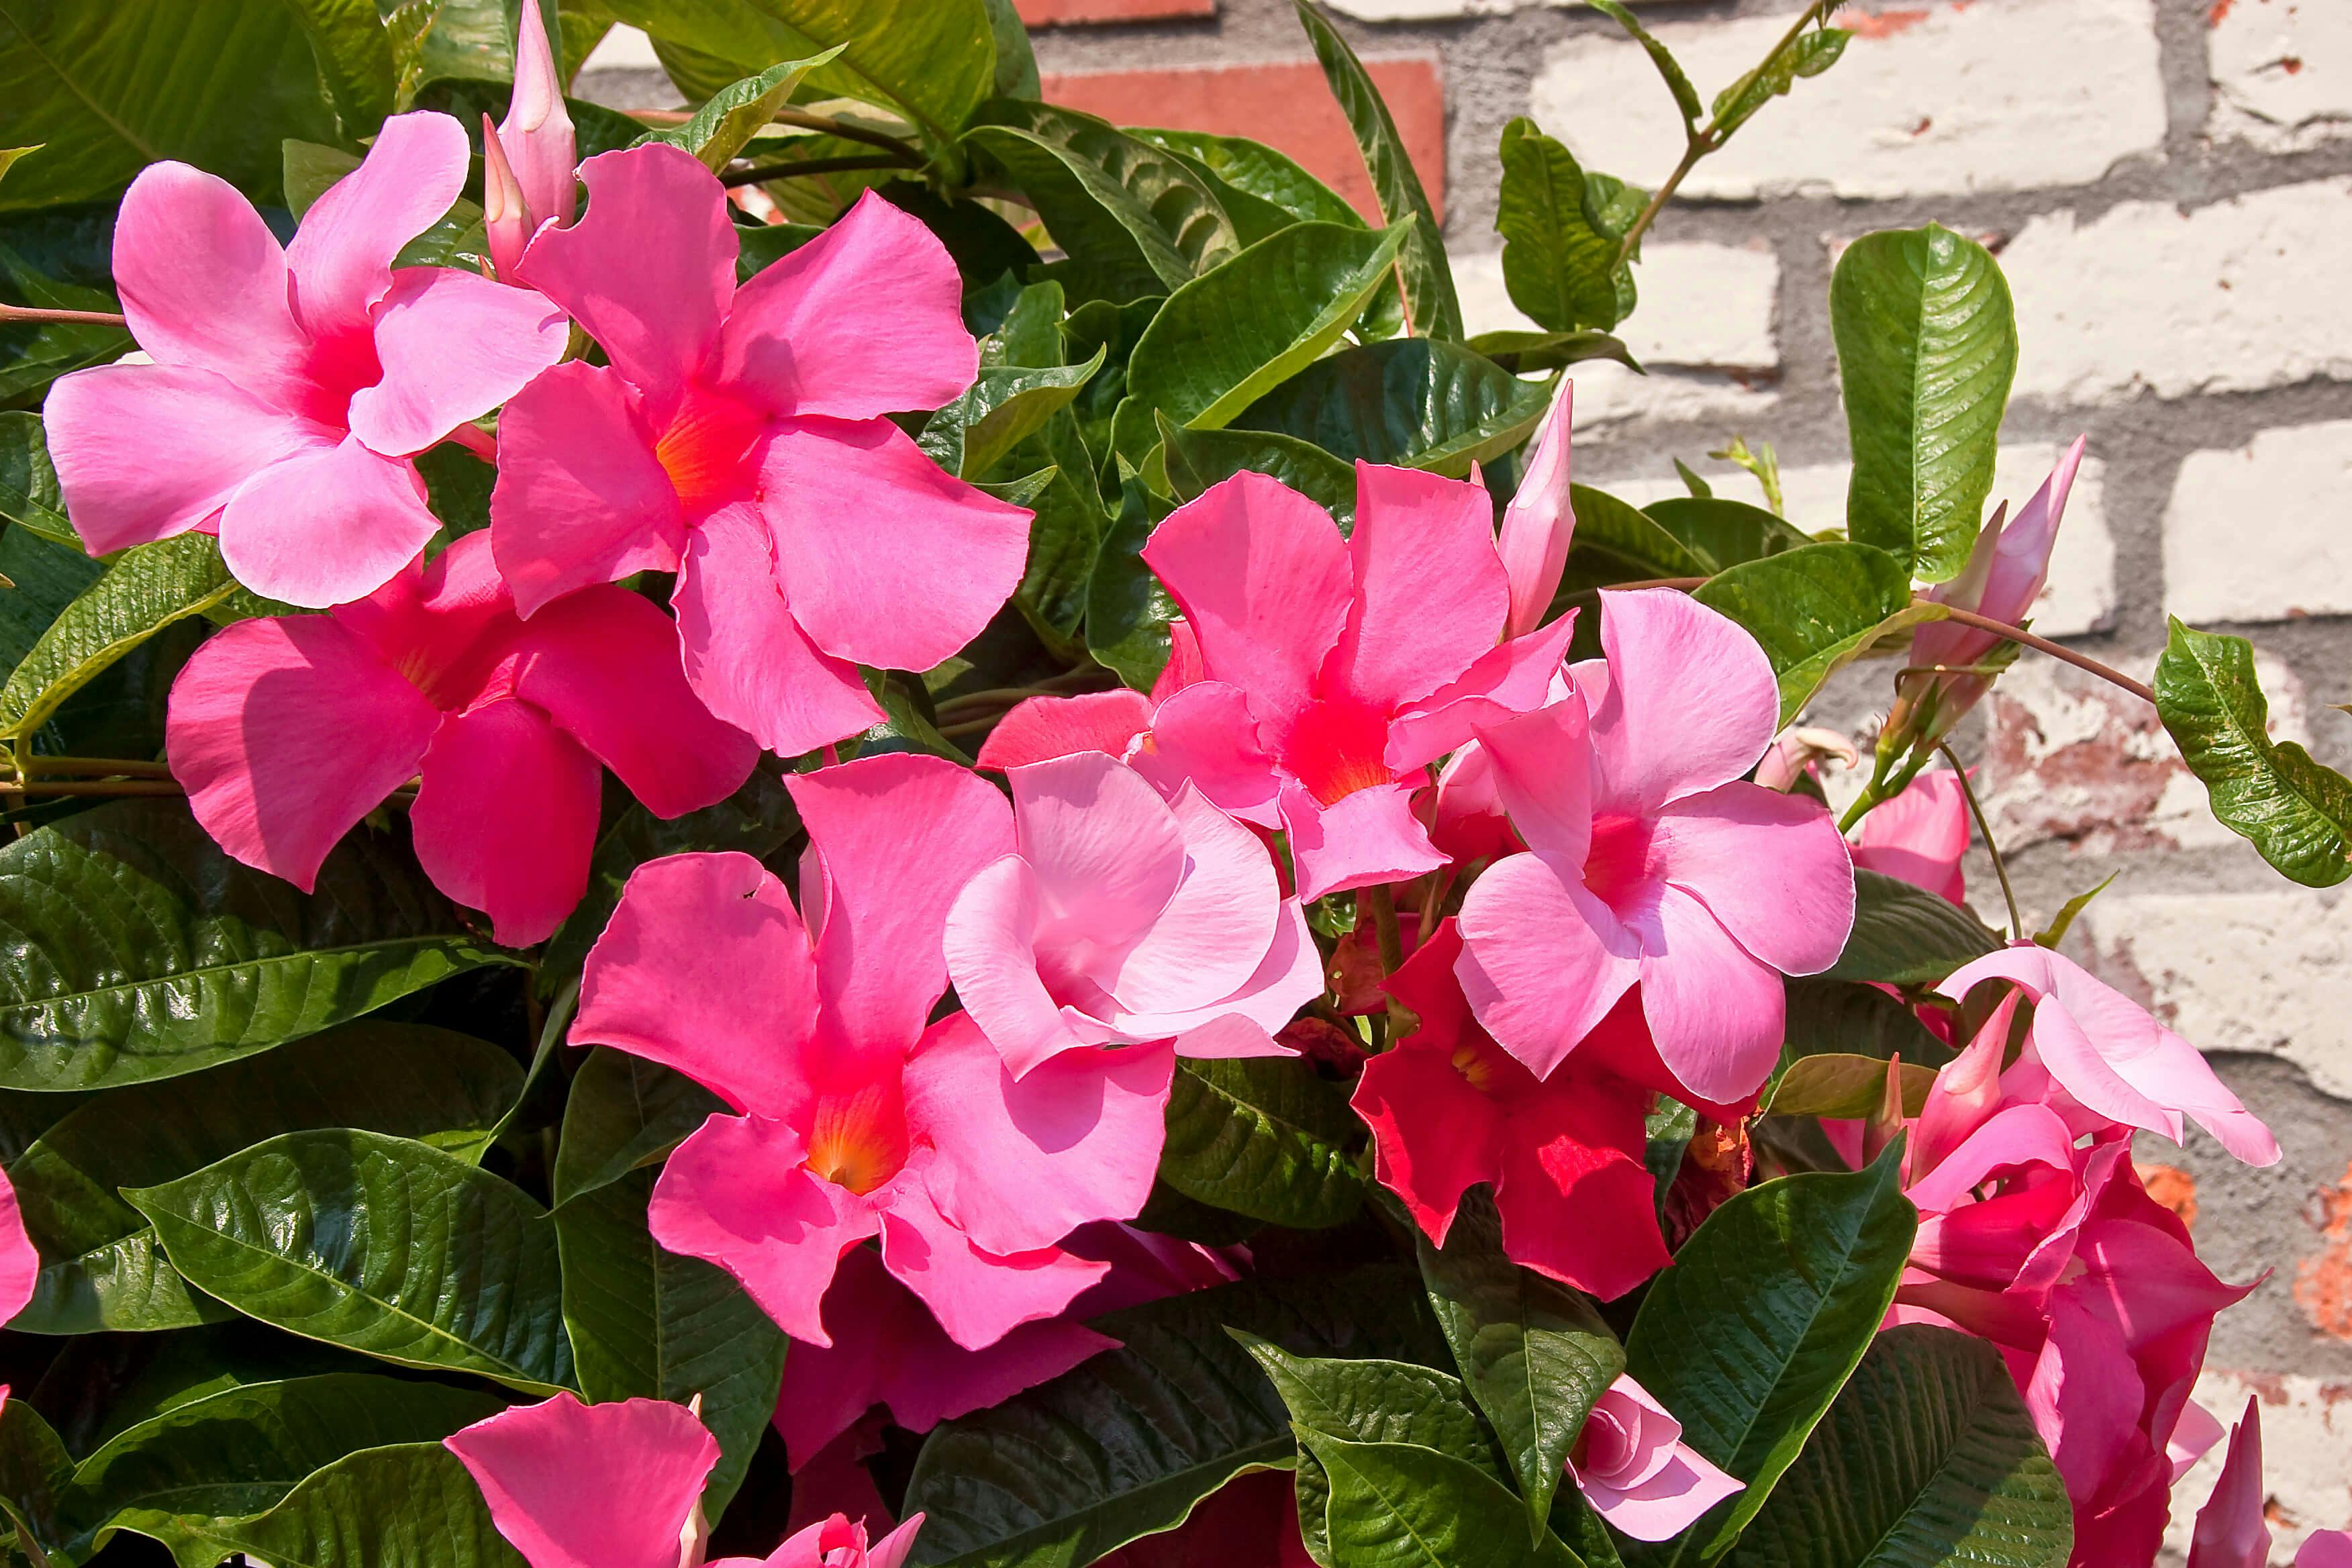 Pink Mandevilla flowers